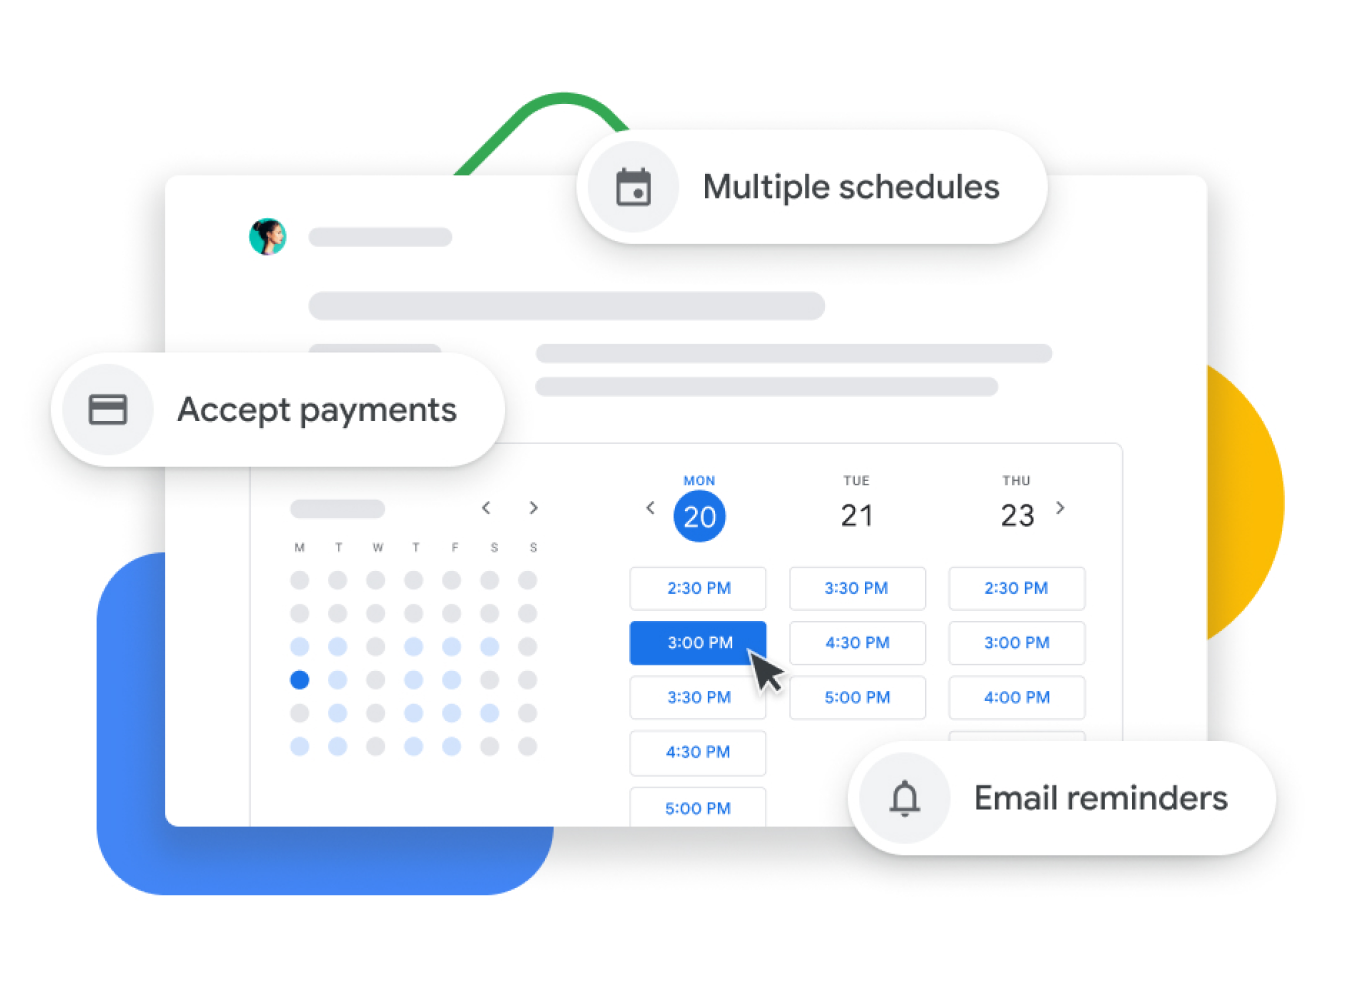 Google 日曆和預約時間表的圖像，顯示使用者可以接受付款、與客戶確認預約時段及傳送電子郵件提醒。